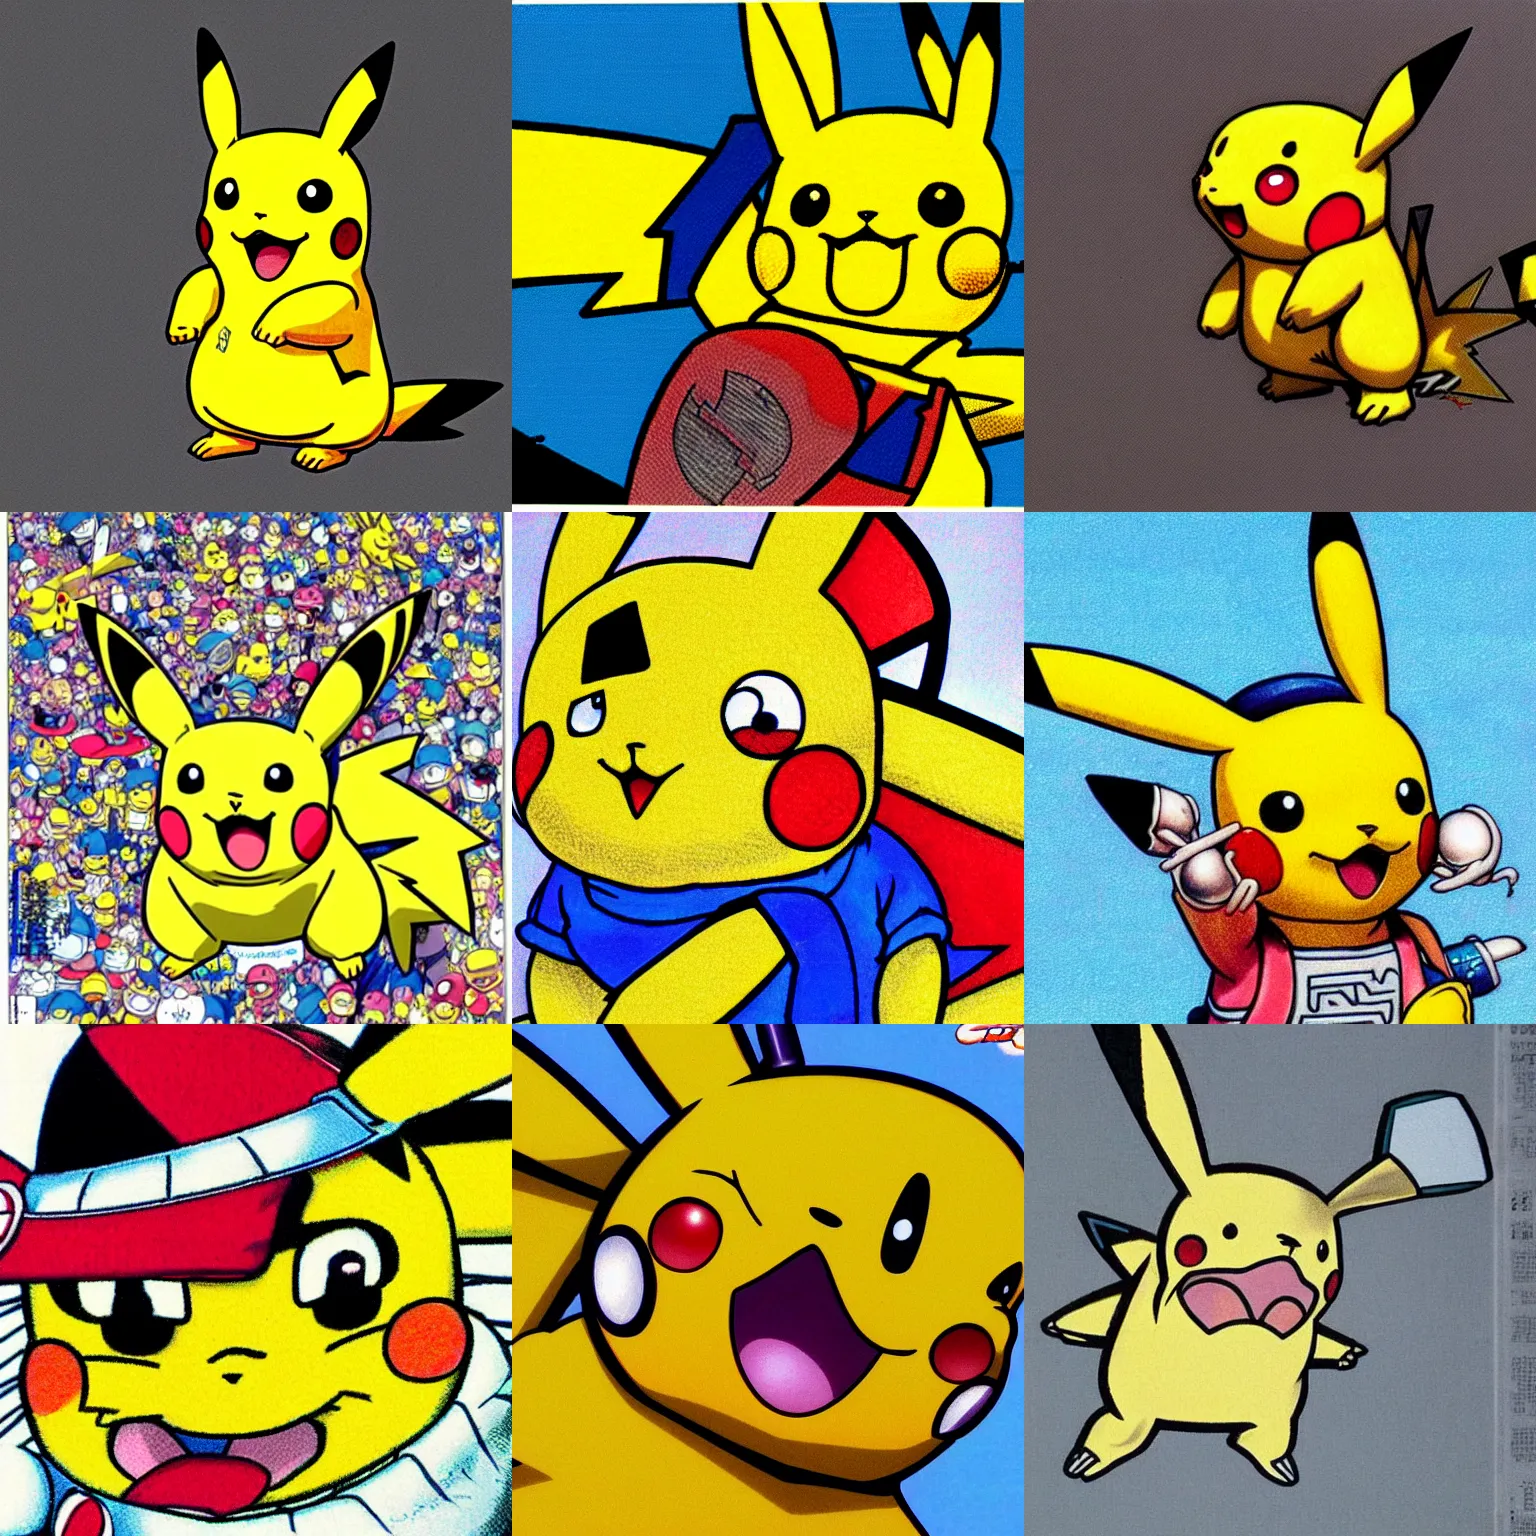 Prompt: detailed!!! very close detailed image of pikachu by akira toriyama